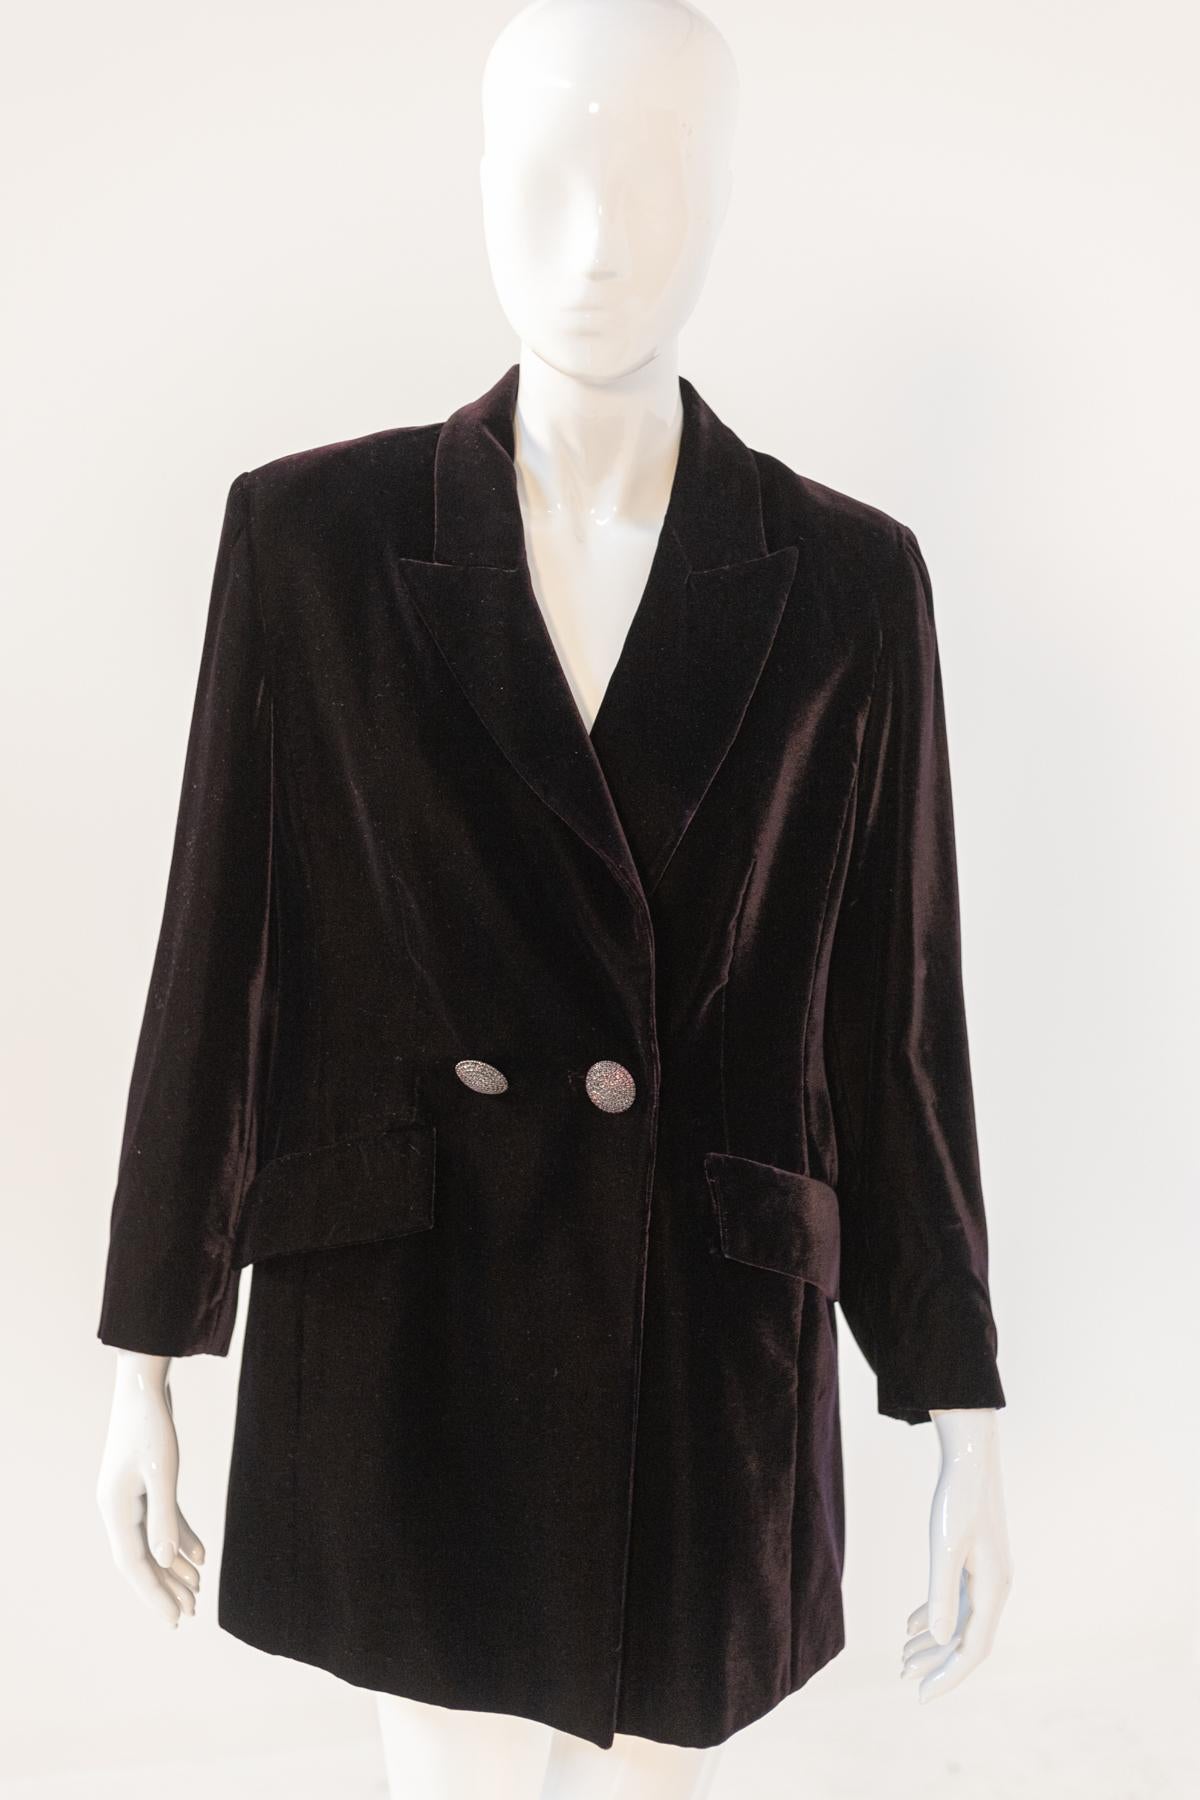 Marina Rinaldi Elegant Italian Jacket For Sale 2